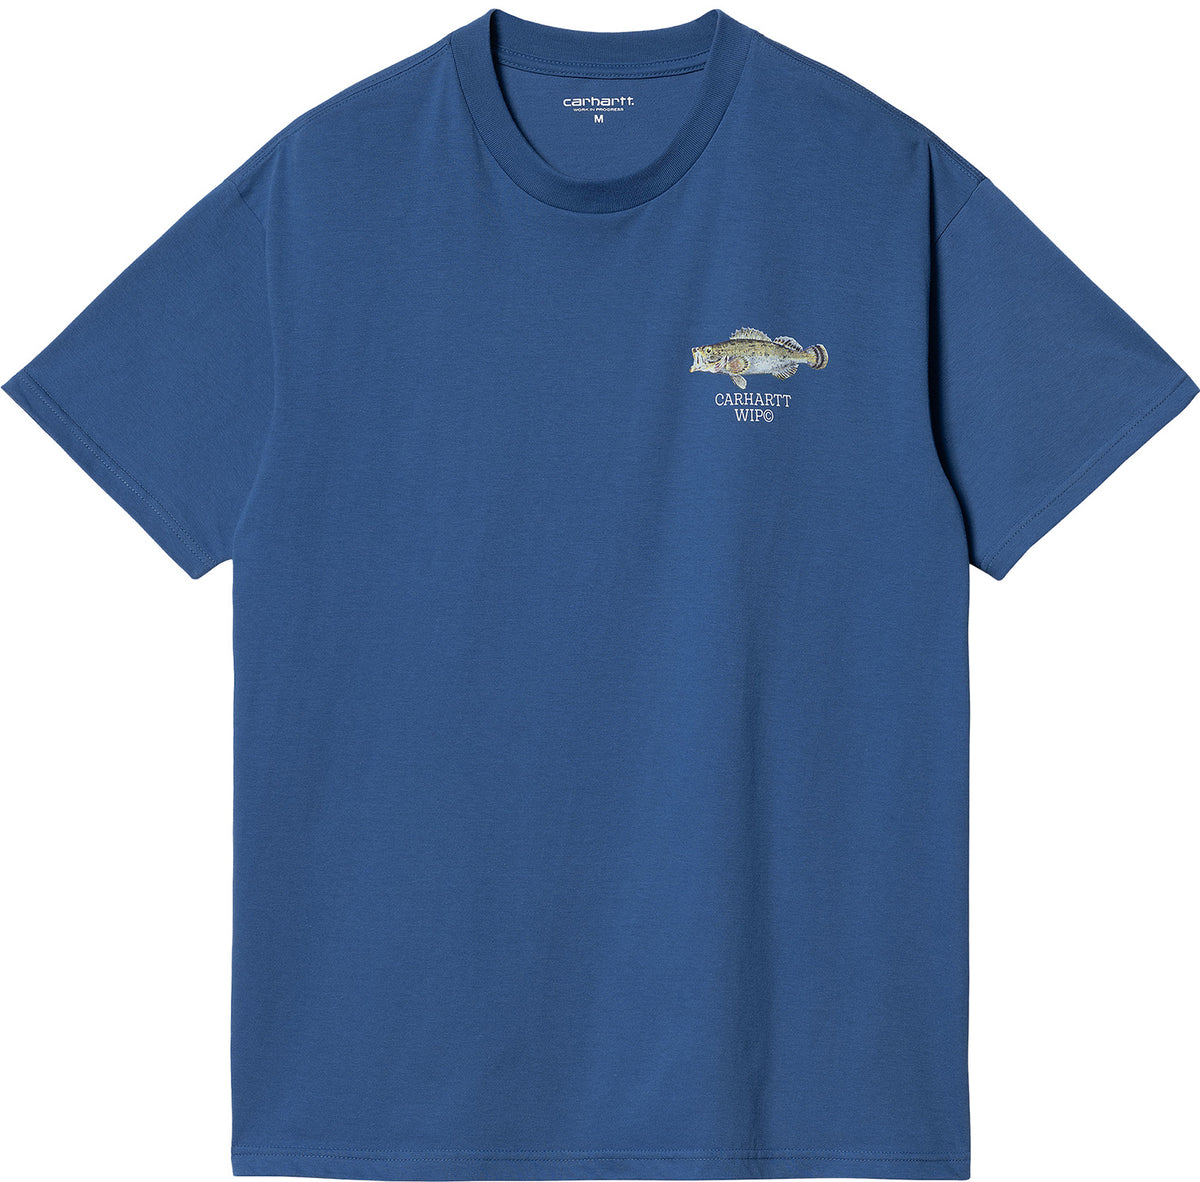 Carhartt WIP S/S Fish T-Shirt - Acapulco - M - Men